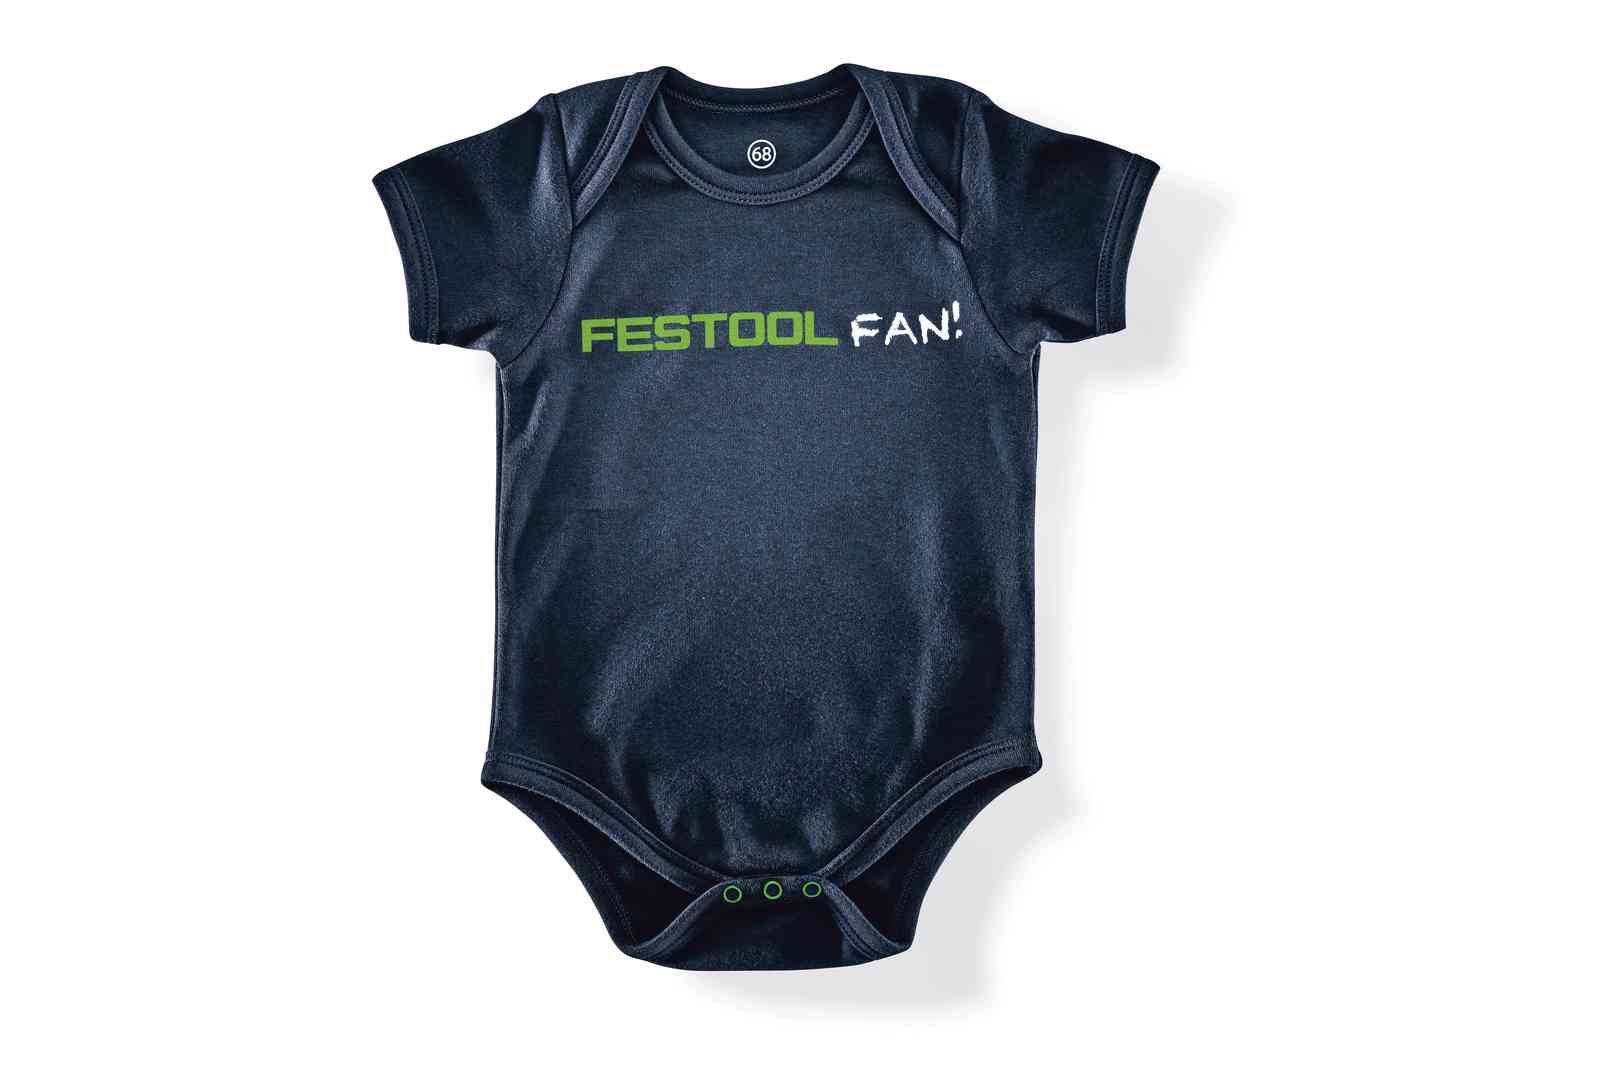 Festool Babybody ”Festool Fan” Festool